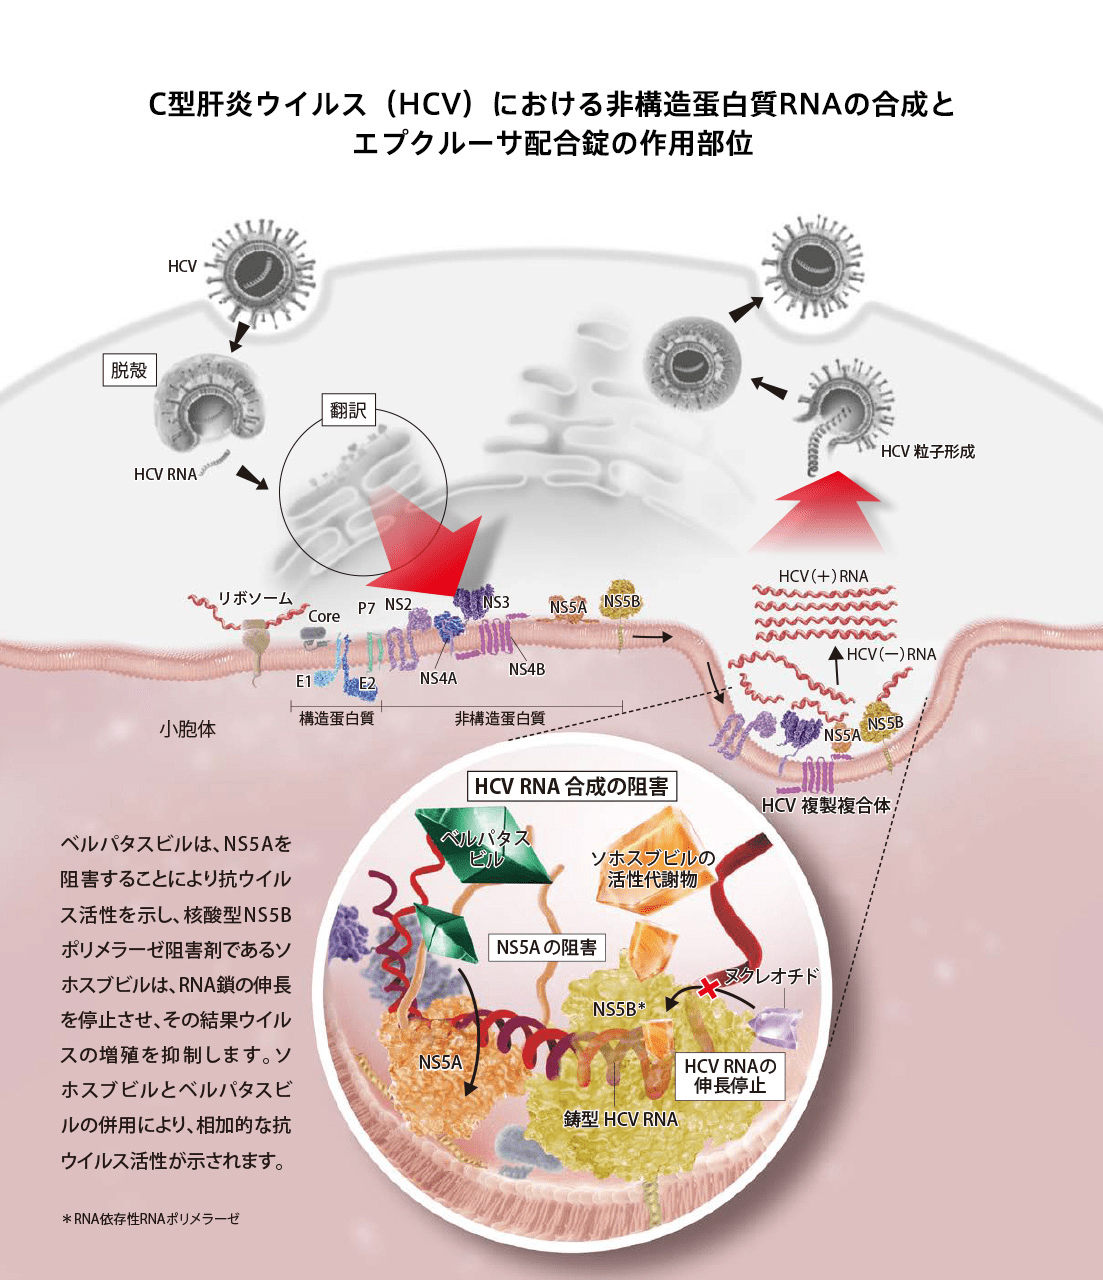 C型肝炎ウイルスにおける非構造蛋白質RNAの合成とエプクルーサ配合錠の作用部位